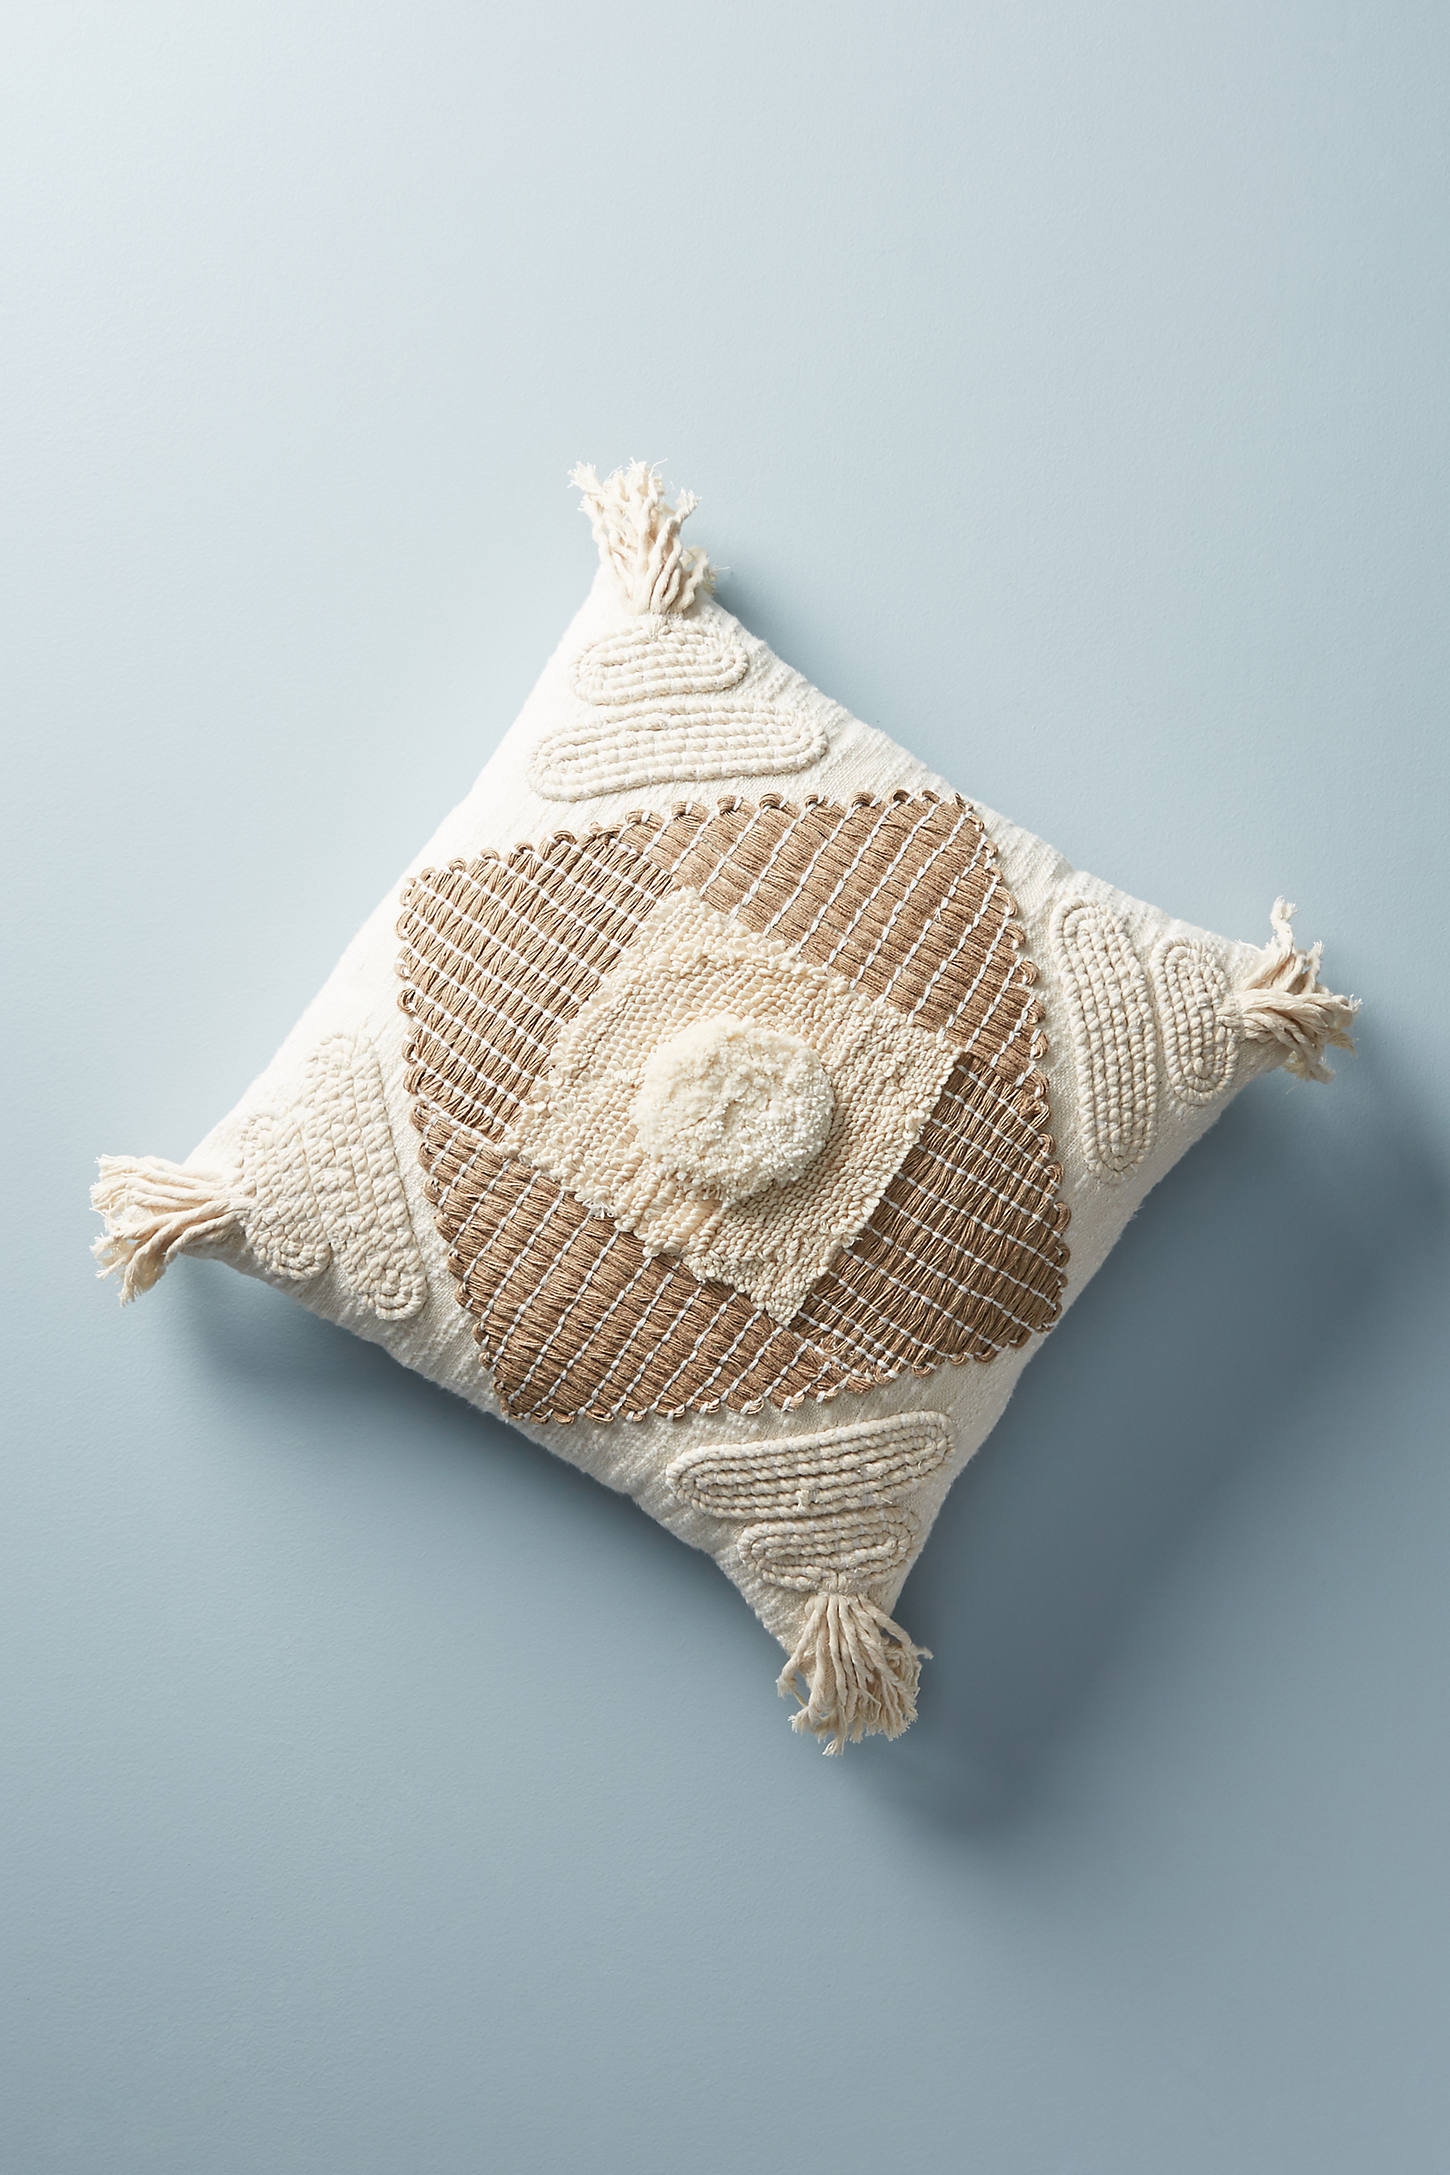 Textured Naylei Pillow - Image 0